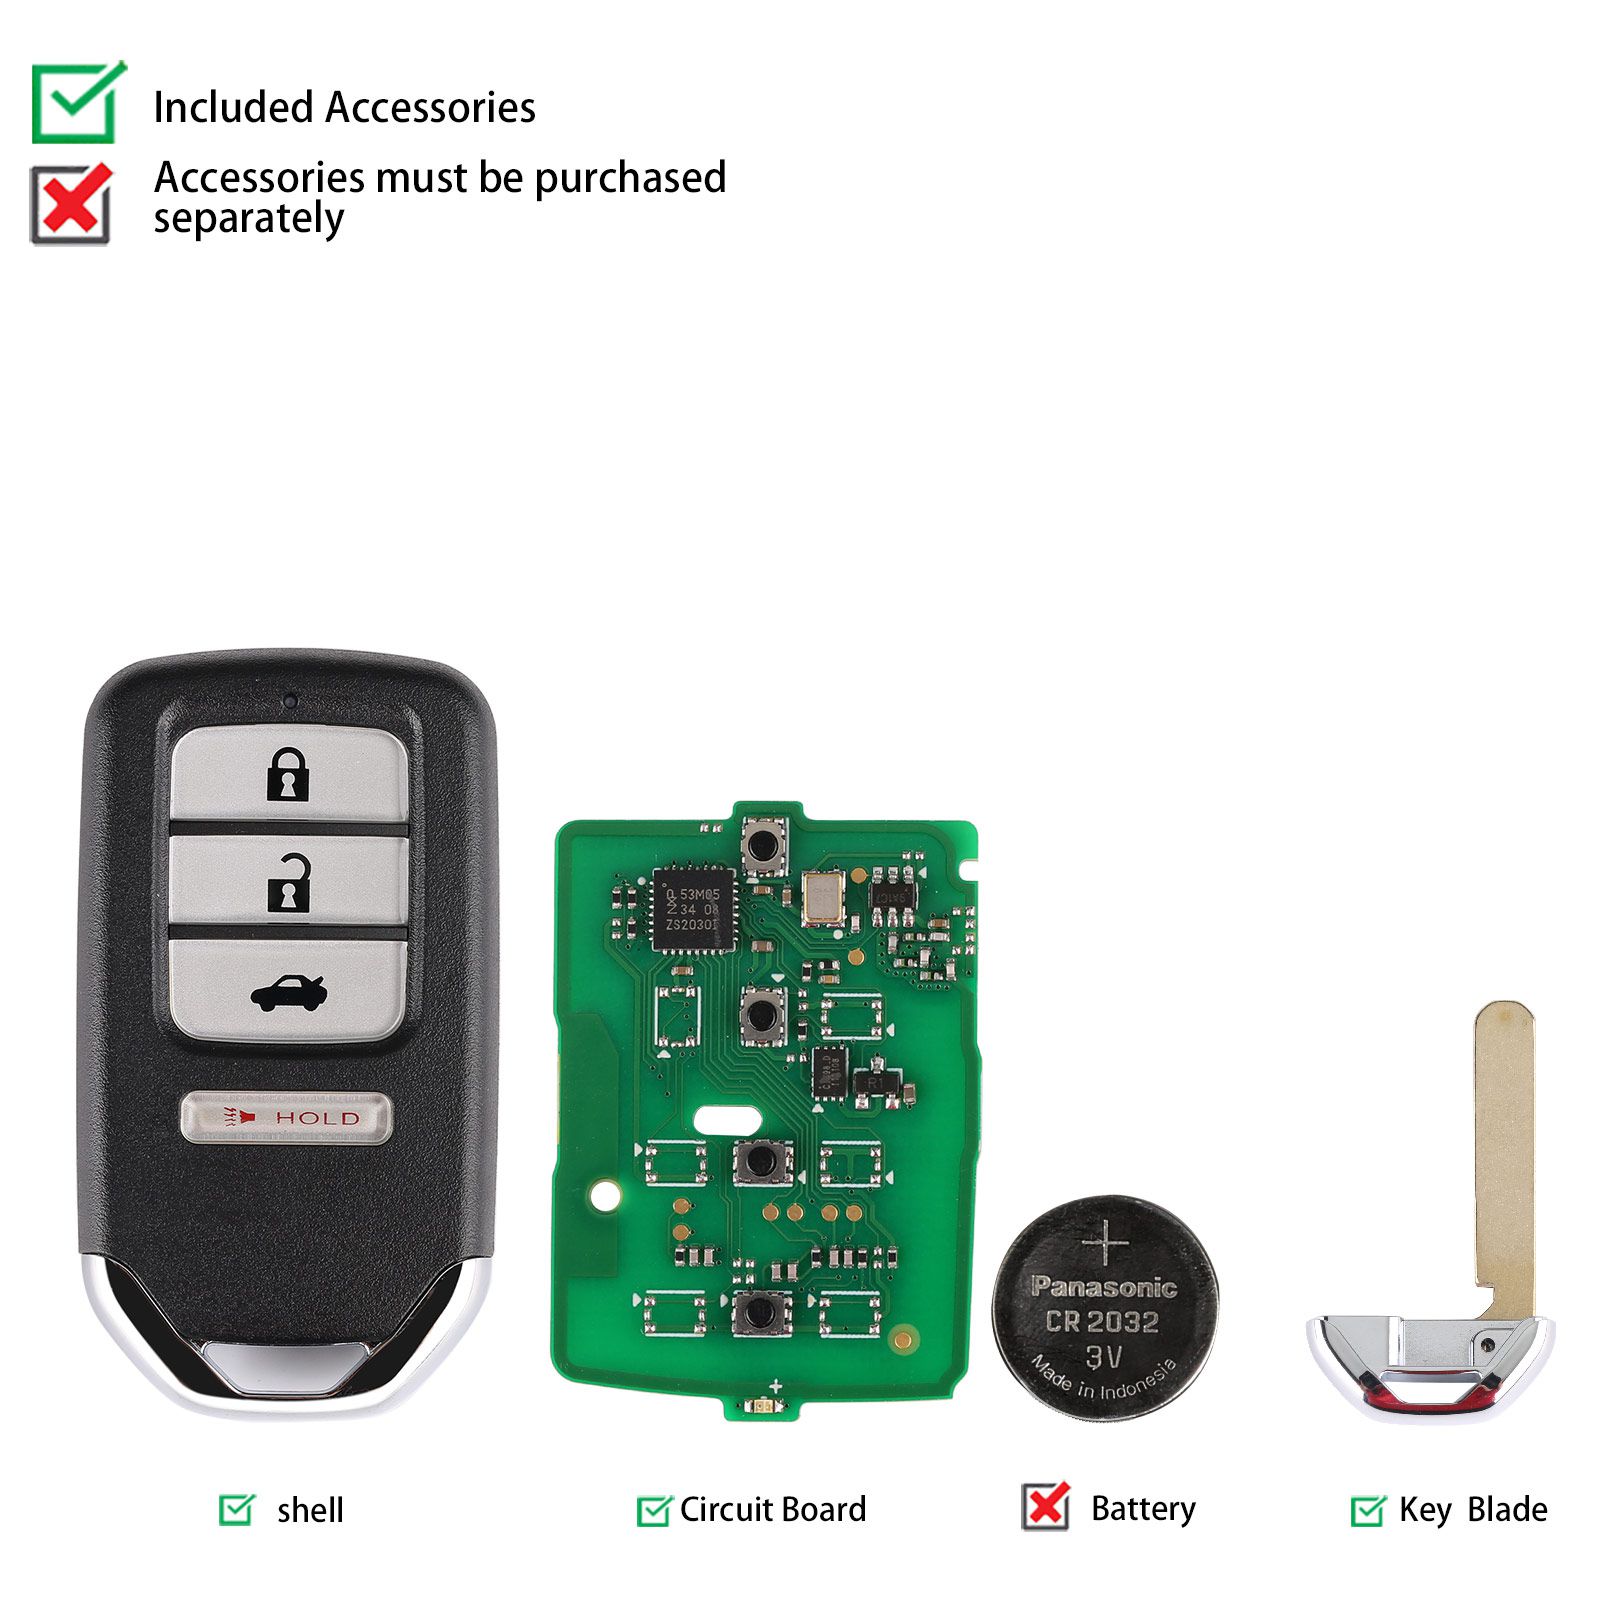 AUTEL IKEYHD004AL Honda 4 Buttons Universal Smart Key 5pcs/lot